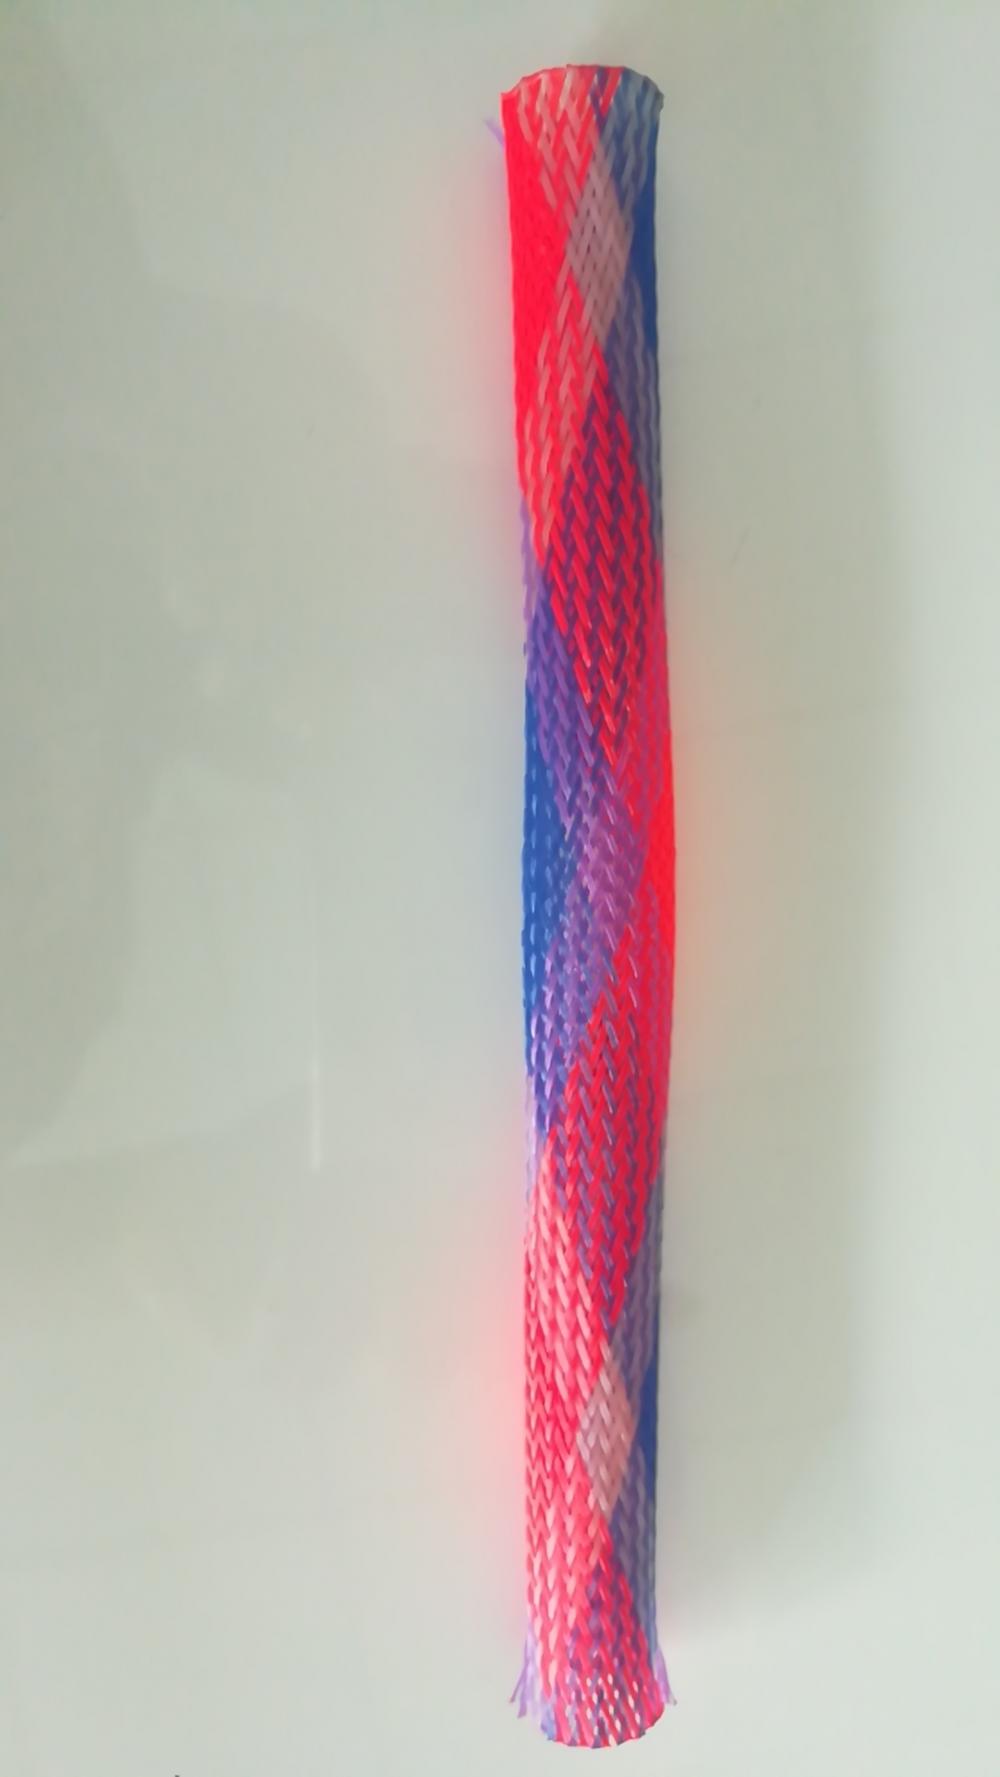 Плетеный ткацкий станок, трубчатая втулка